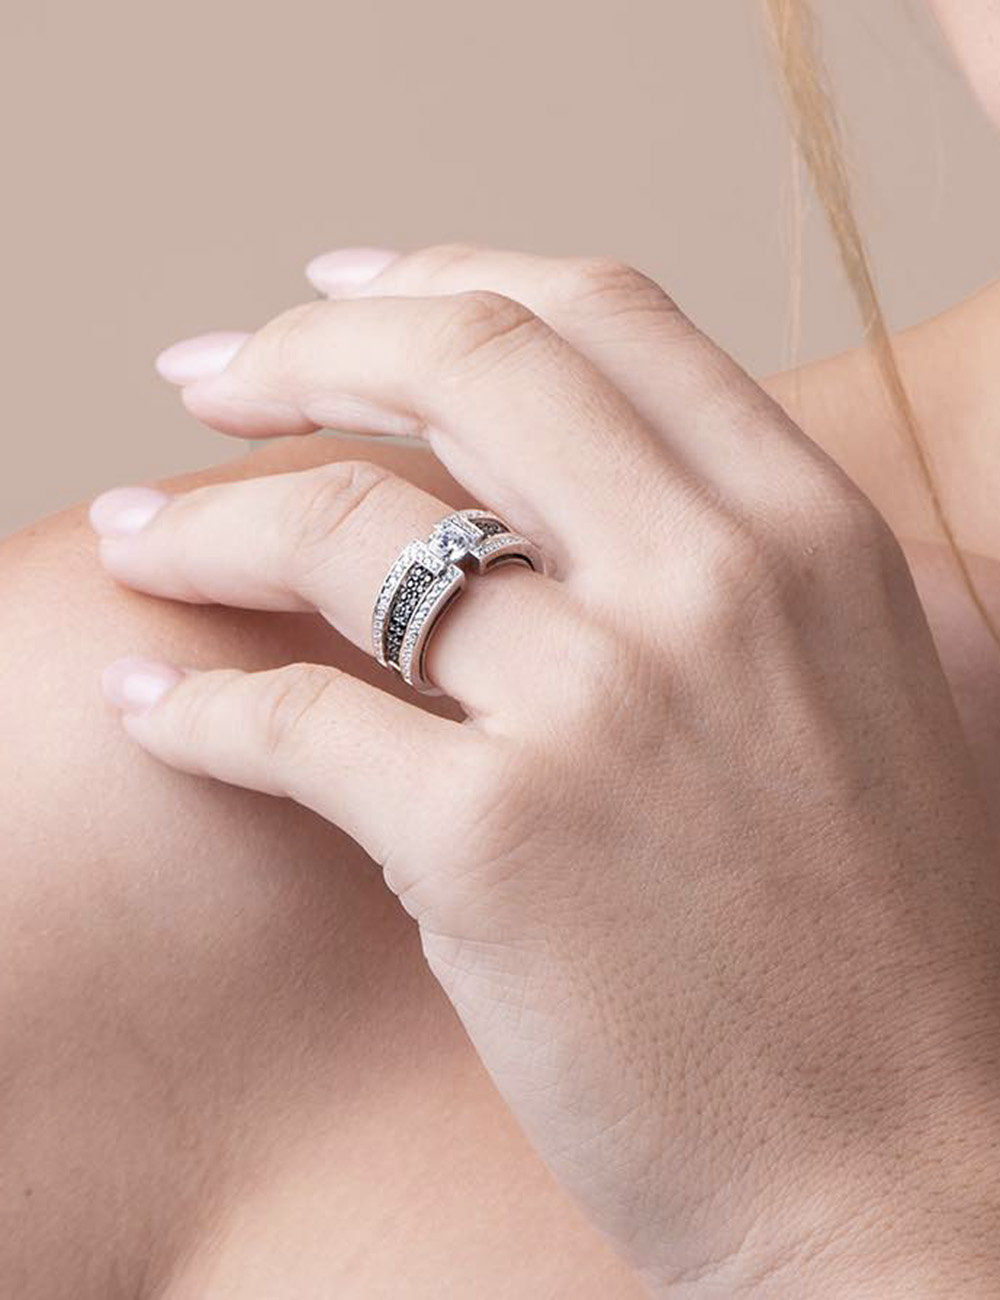 Luxury women's ring, made in France, 0.50ct white diamond, white/black diamond pave.